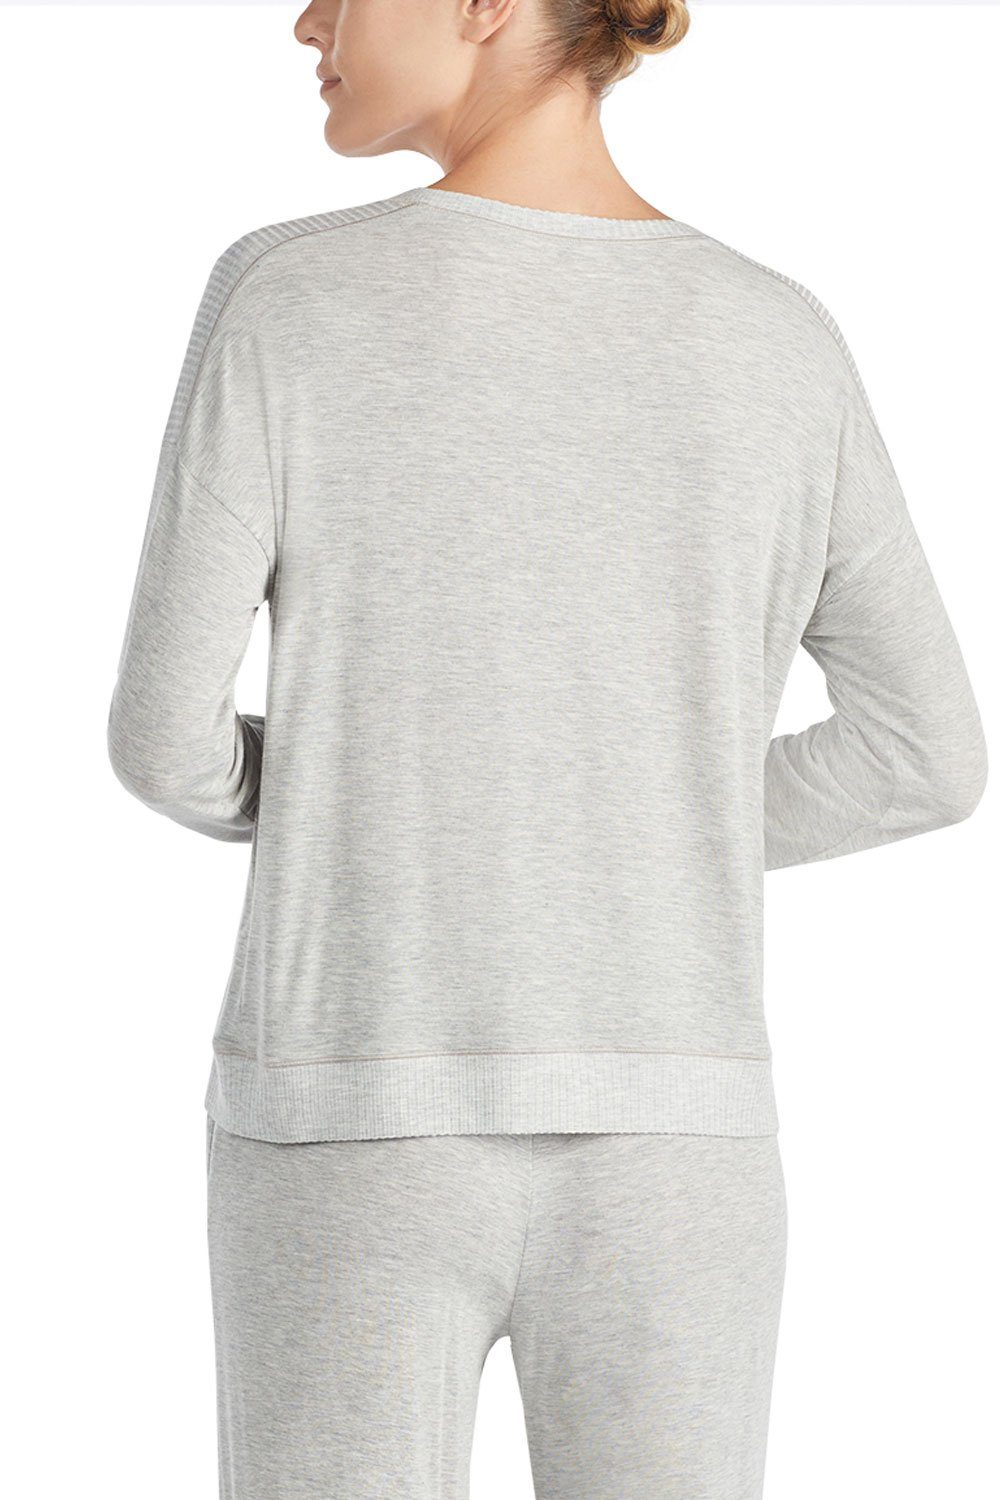 DKNY Sleepshirt heather YI3419330 Top light Essentials grey